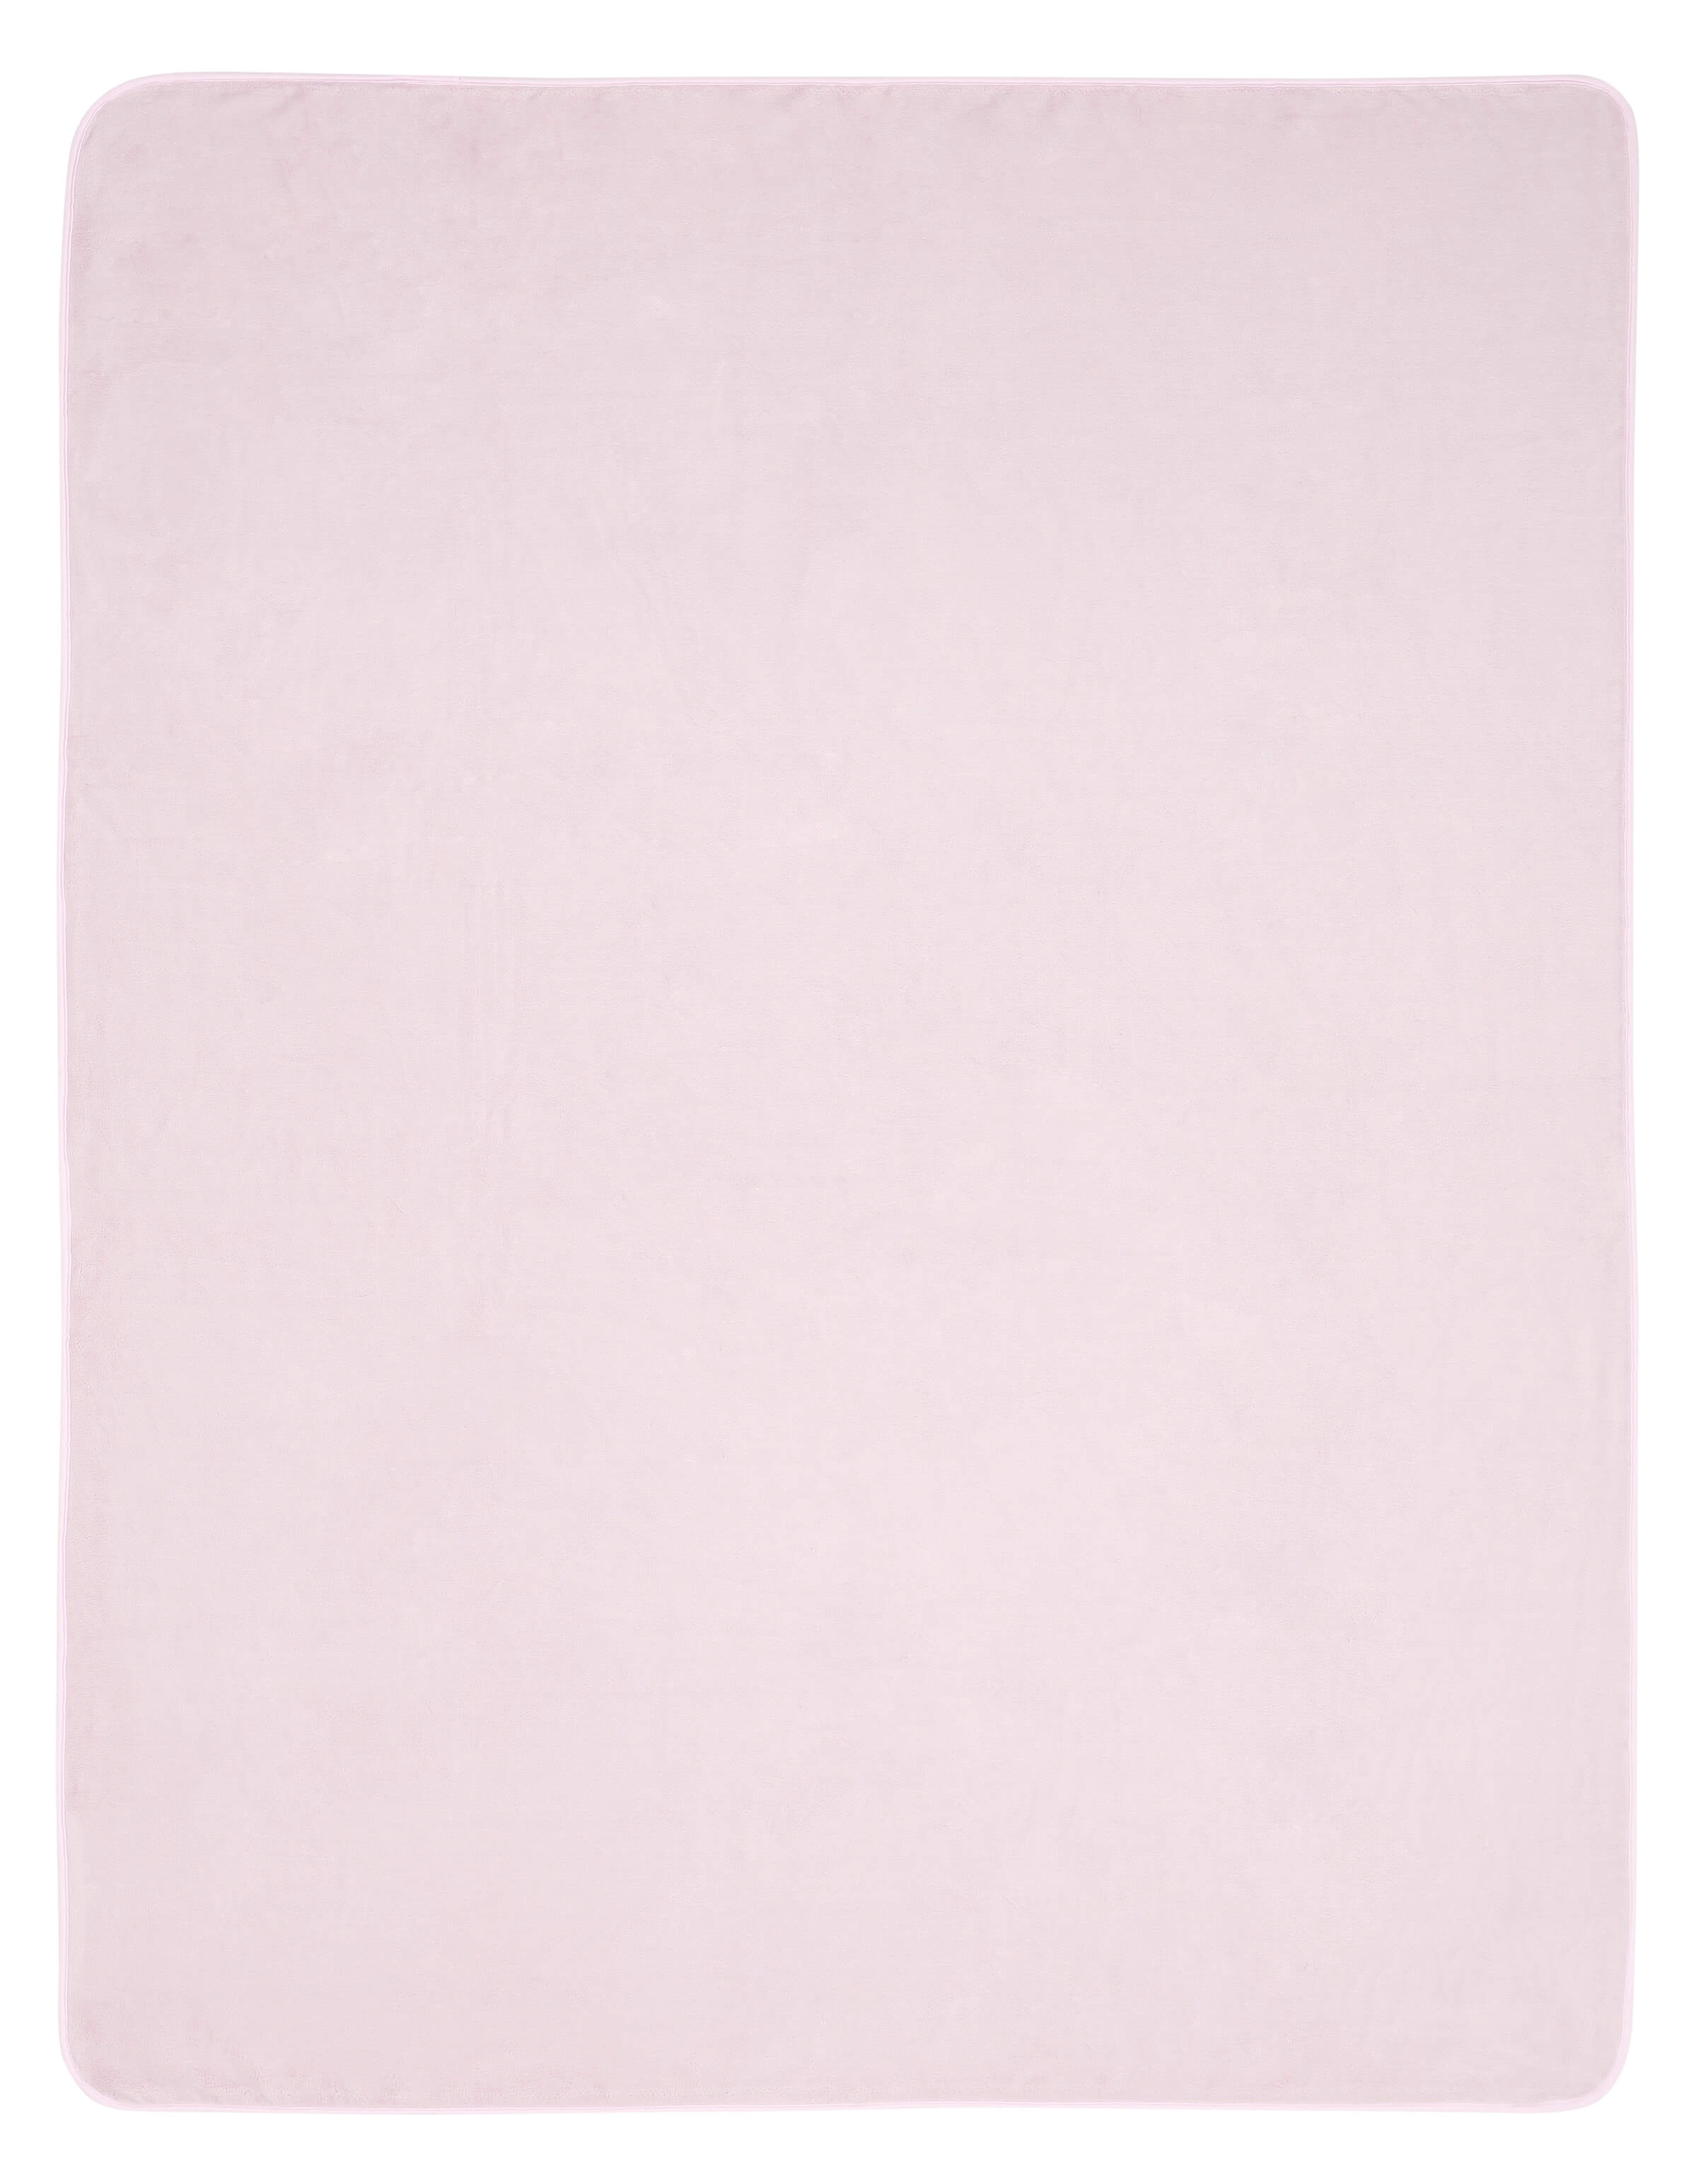 Покрывало Pure Soft Rose ☞ Размер: 150 x 200 см